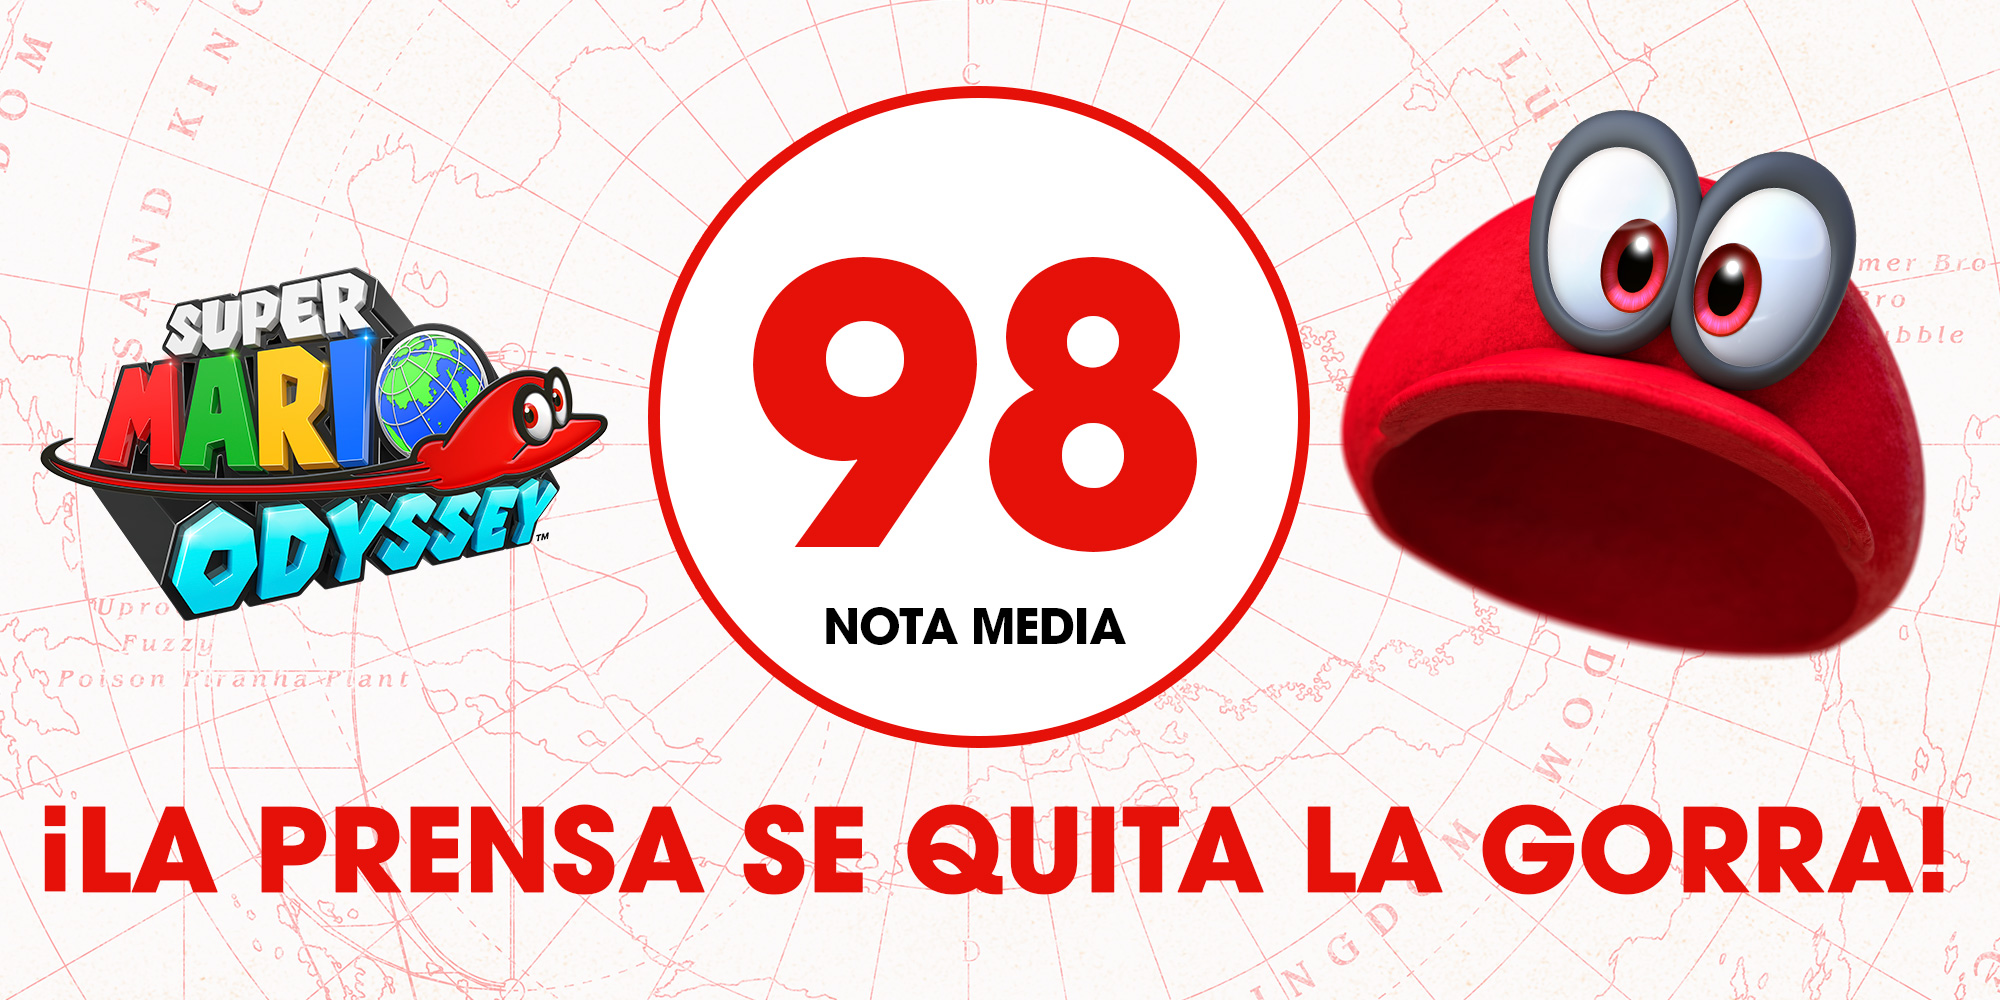 La prensa se quita la gorra con Super Mario Odyssey